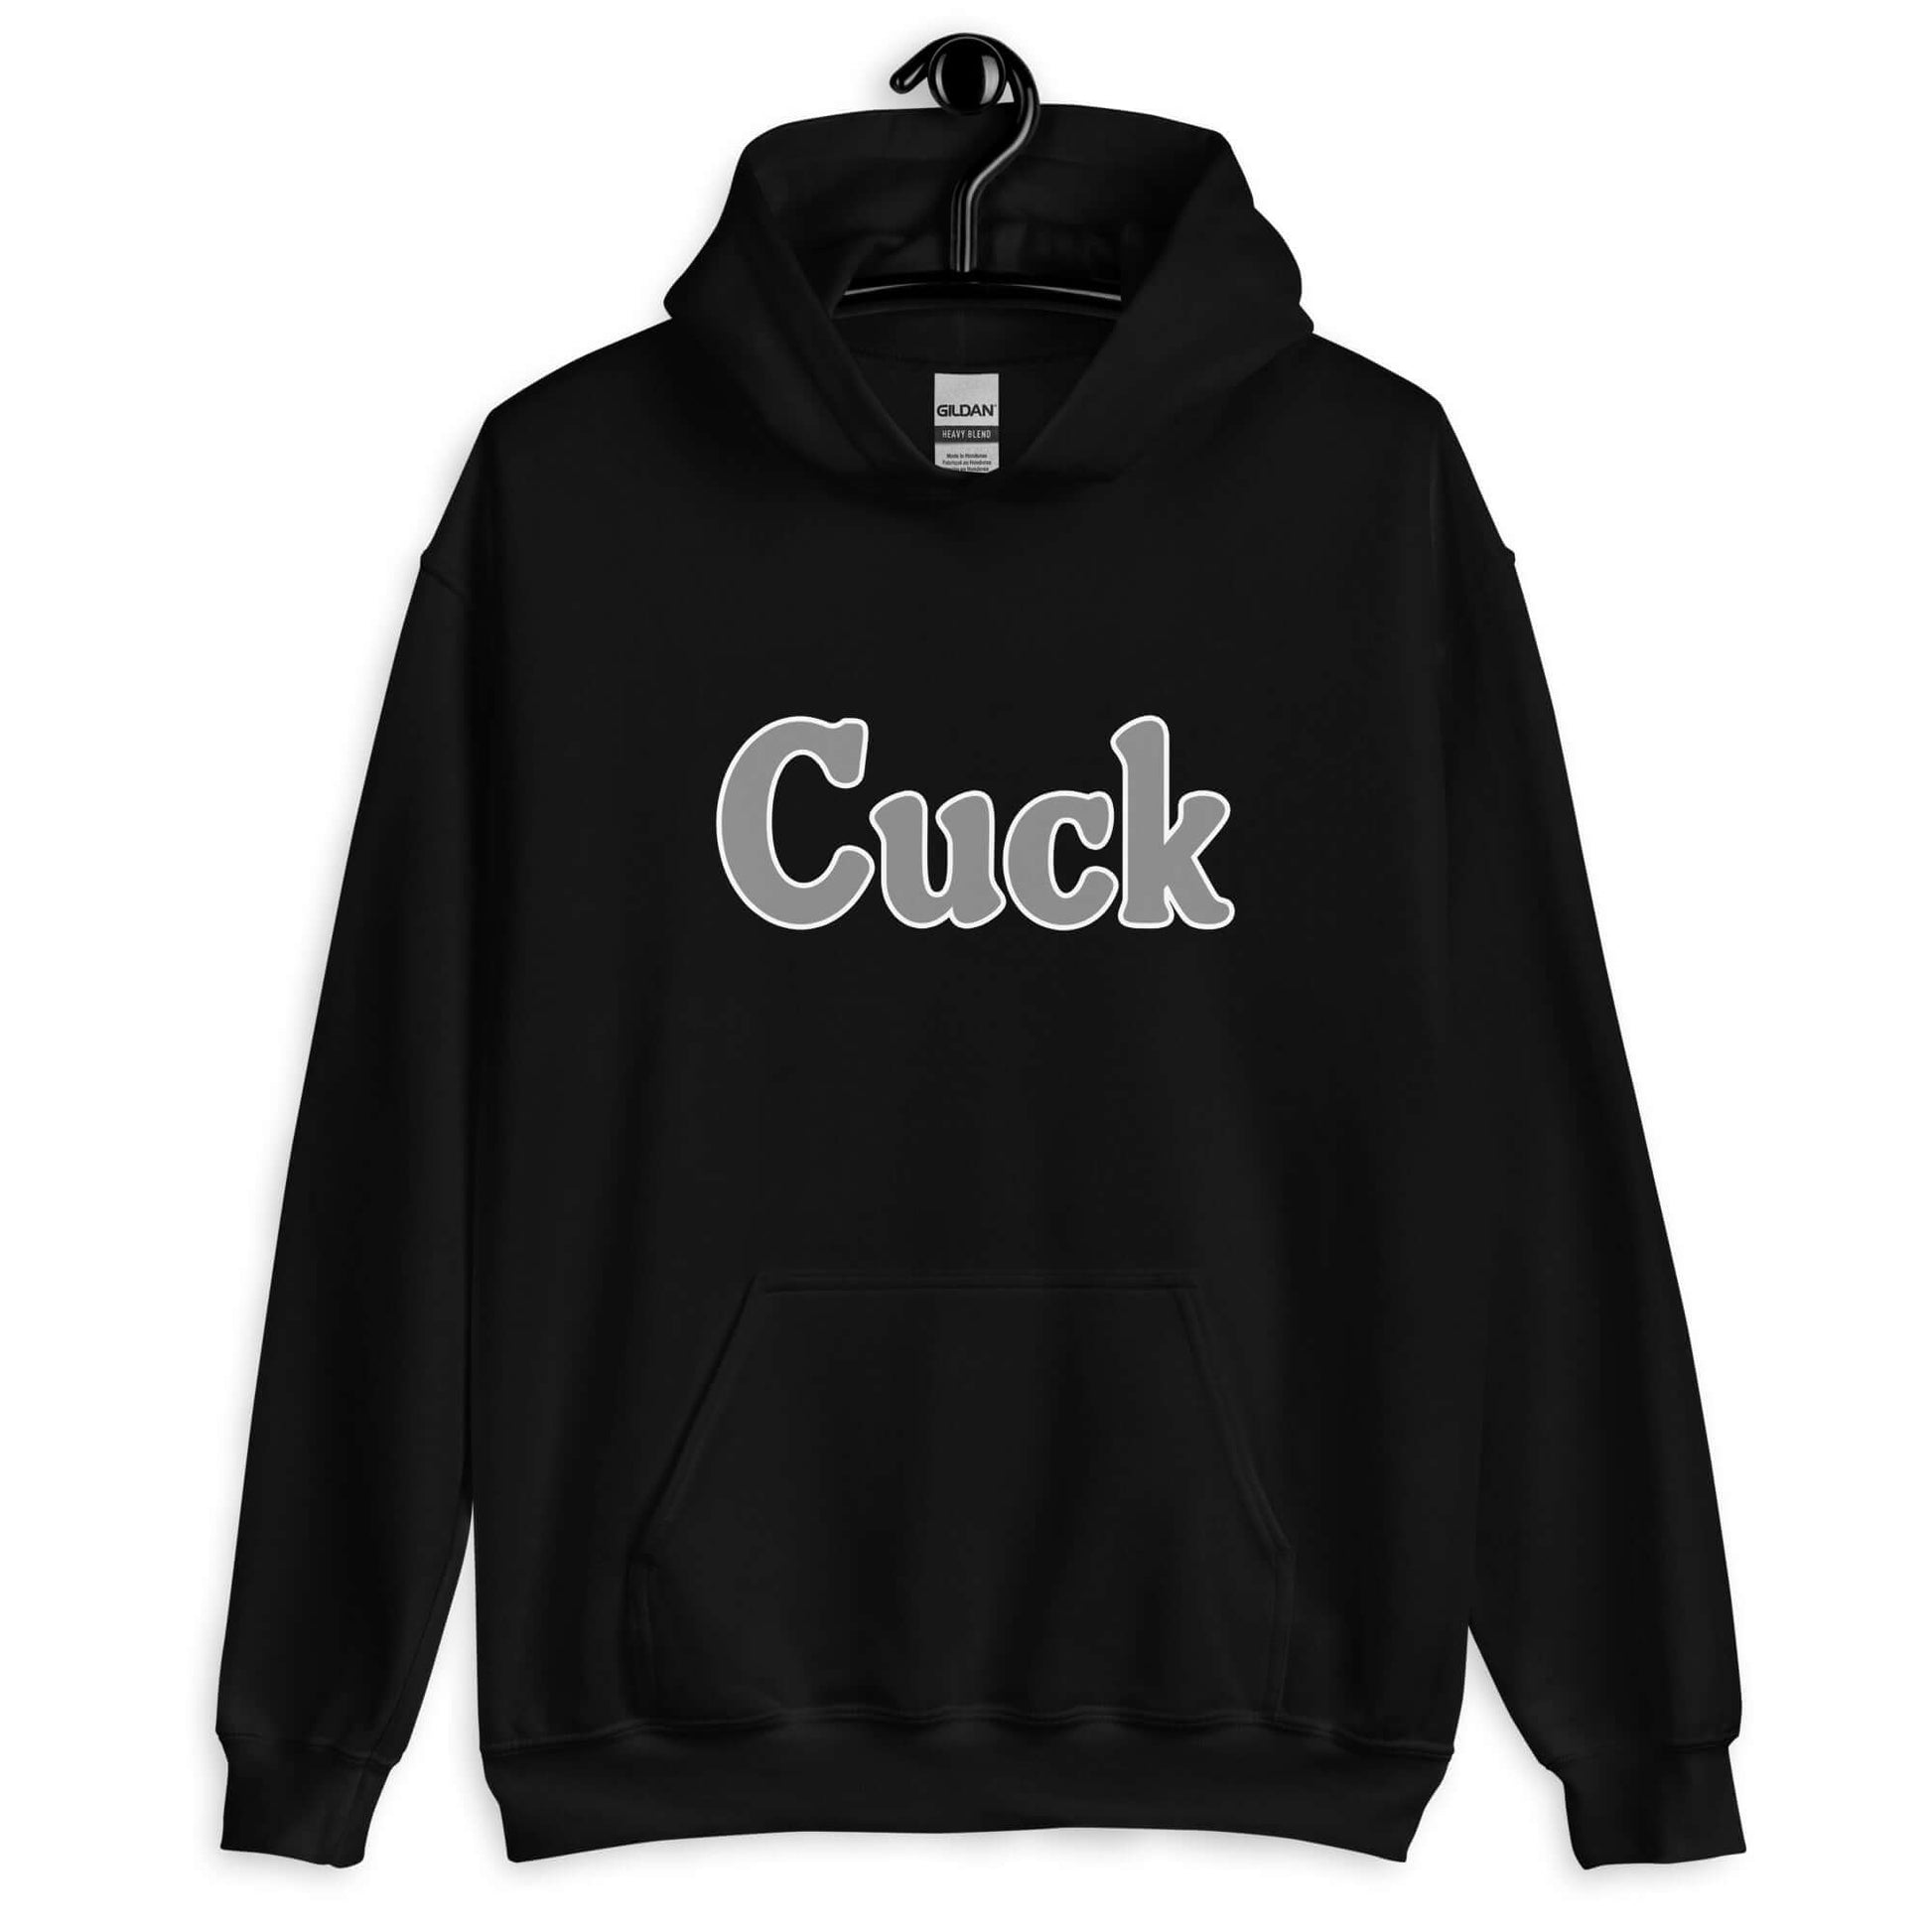 Black hoodie sweatshirt with the word Cuck printed on the front in grey.